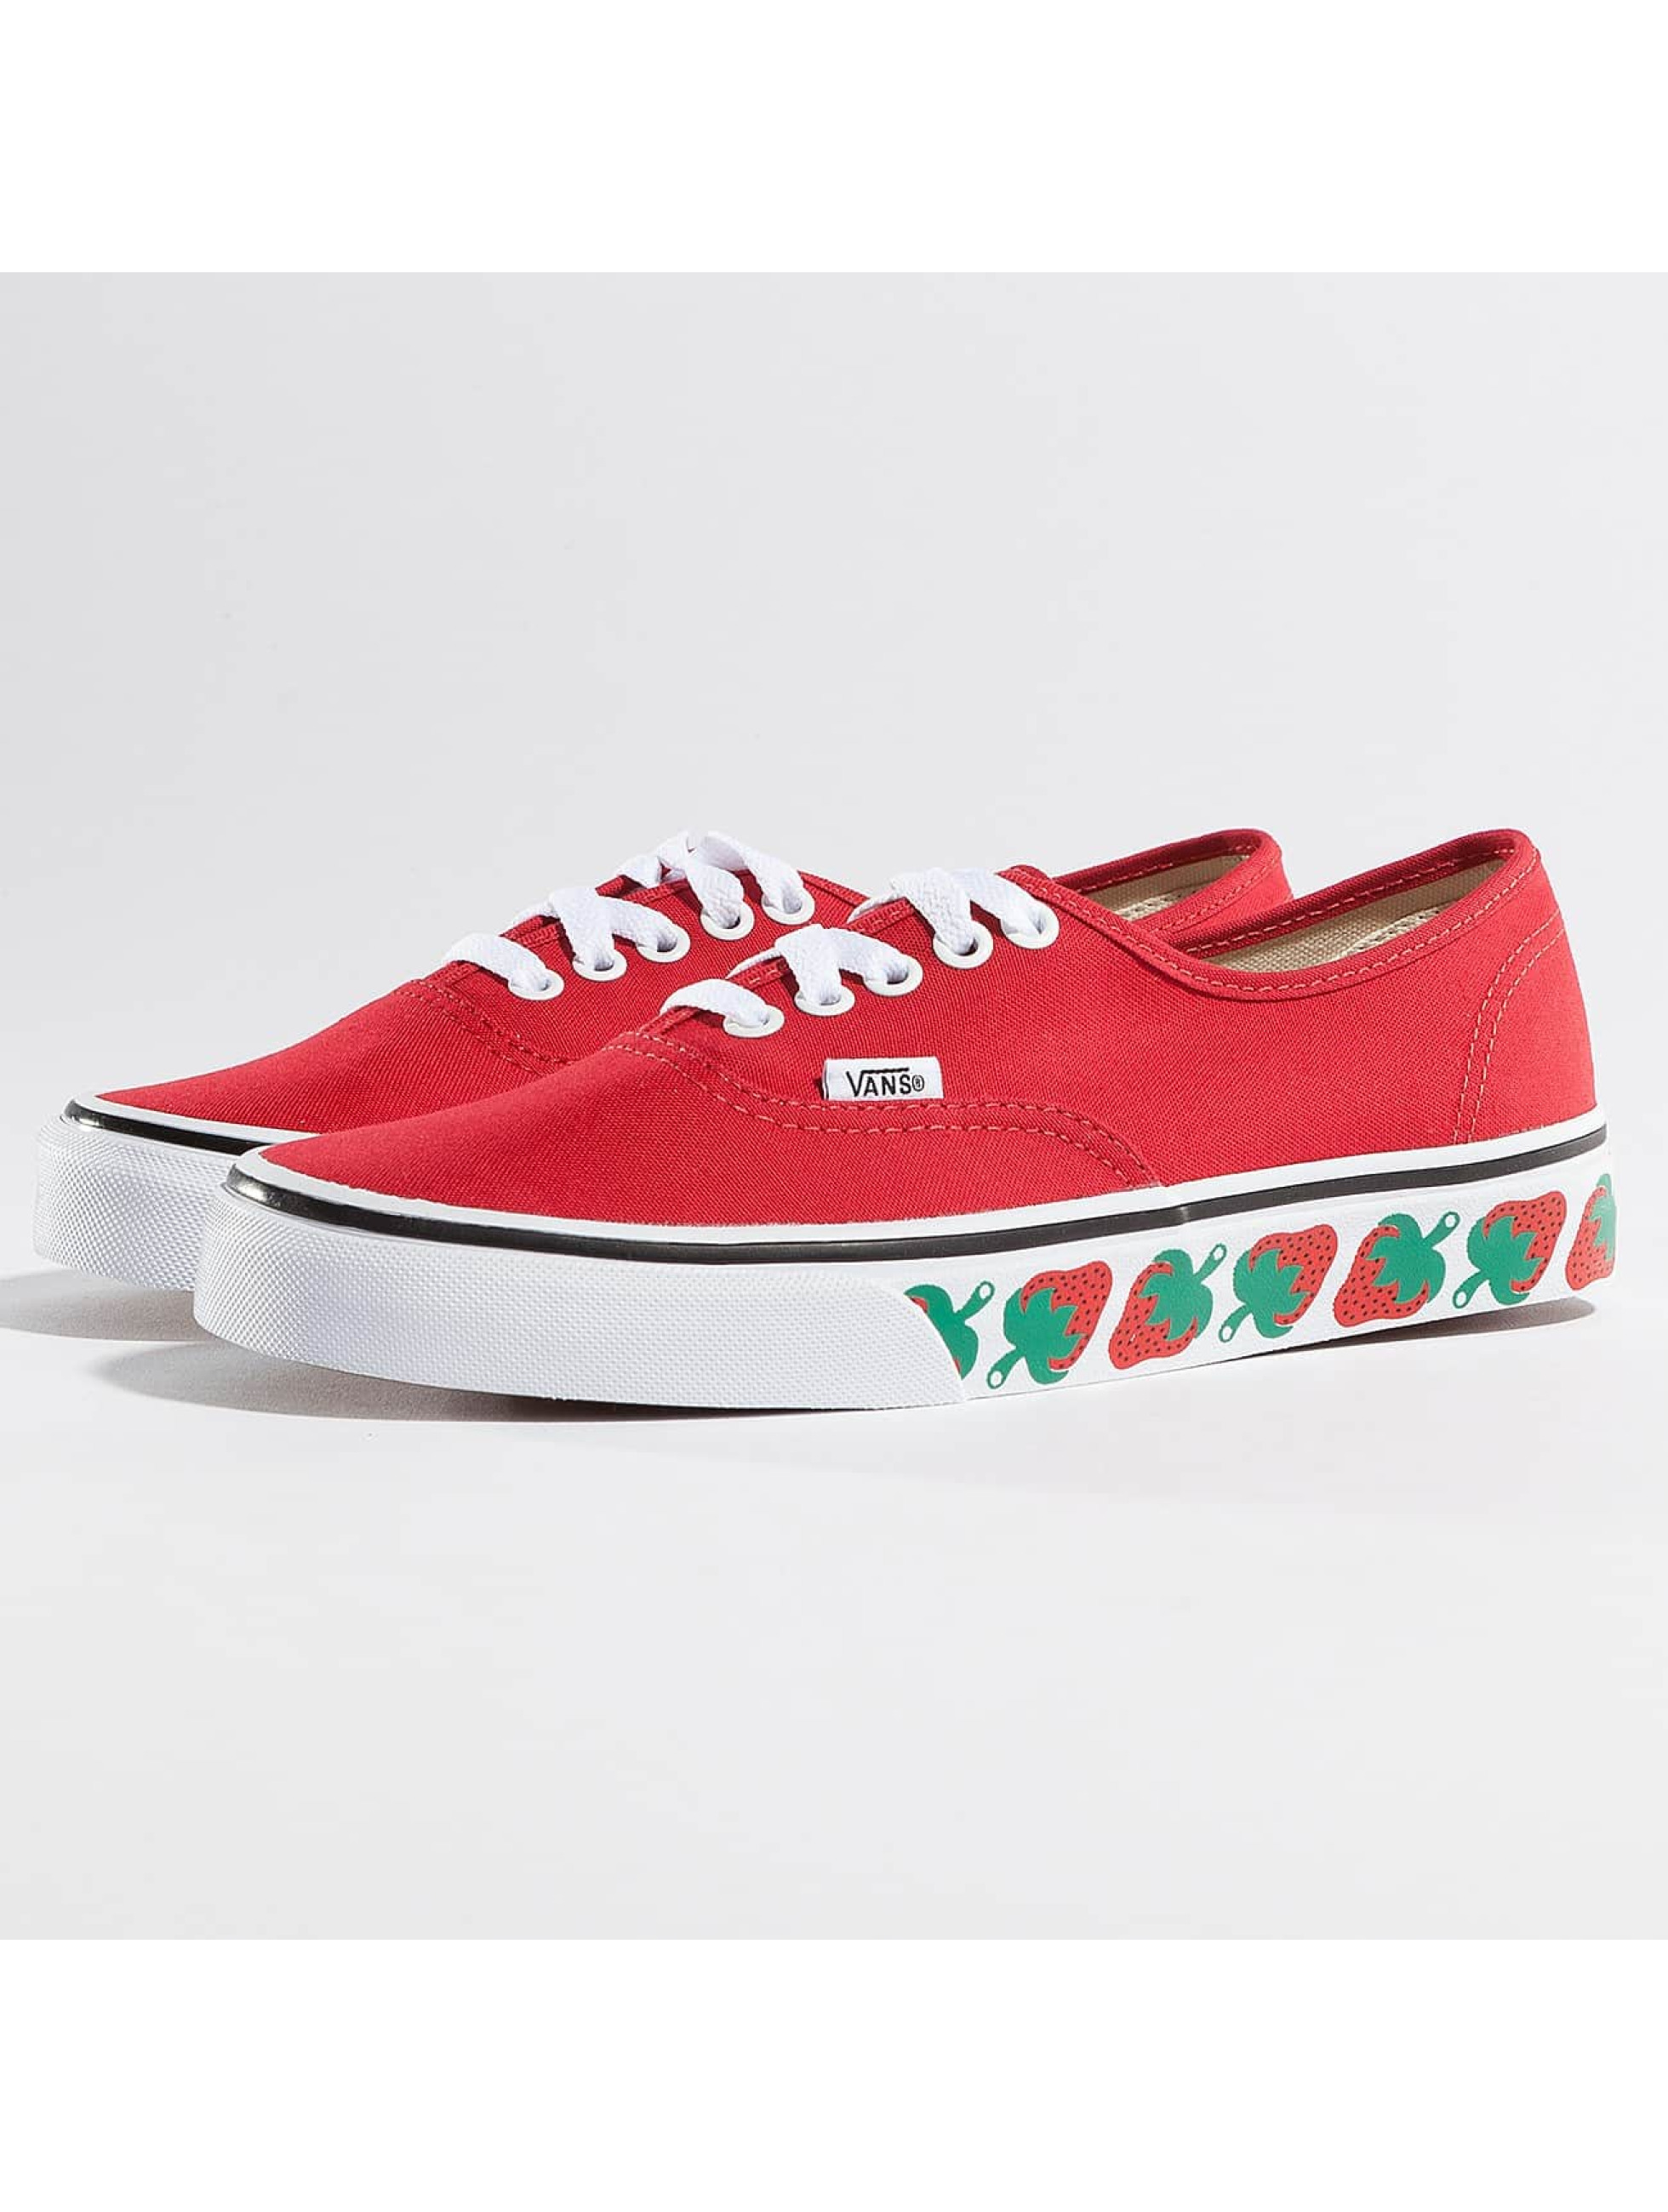 Vans Chaussures / Baskets Authentic Strawberry Tape en rouge